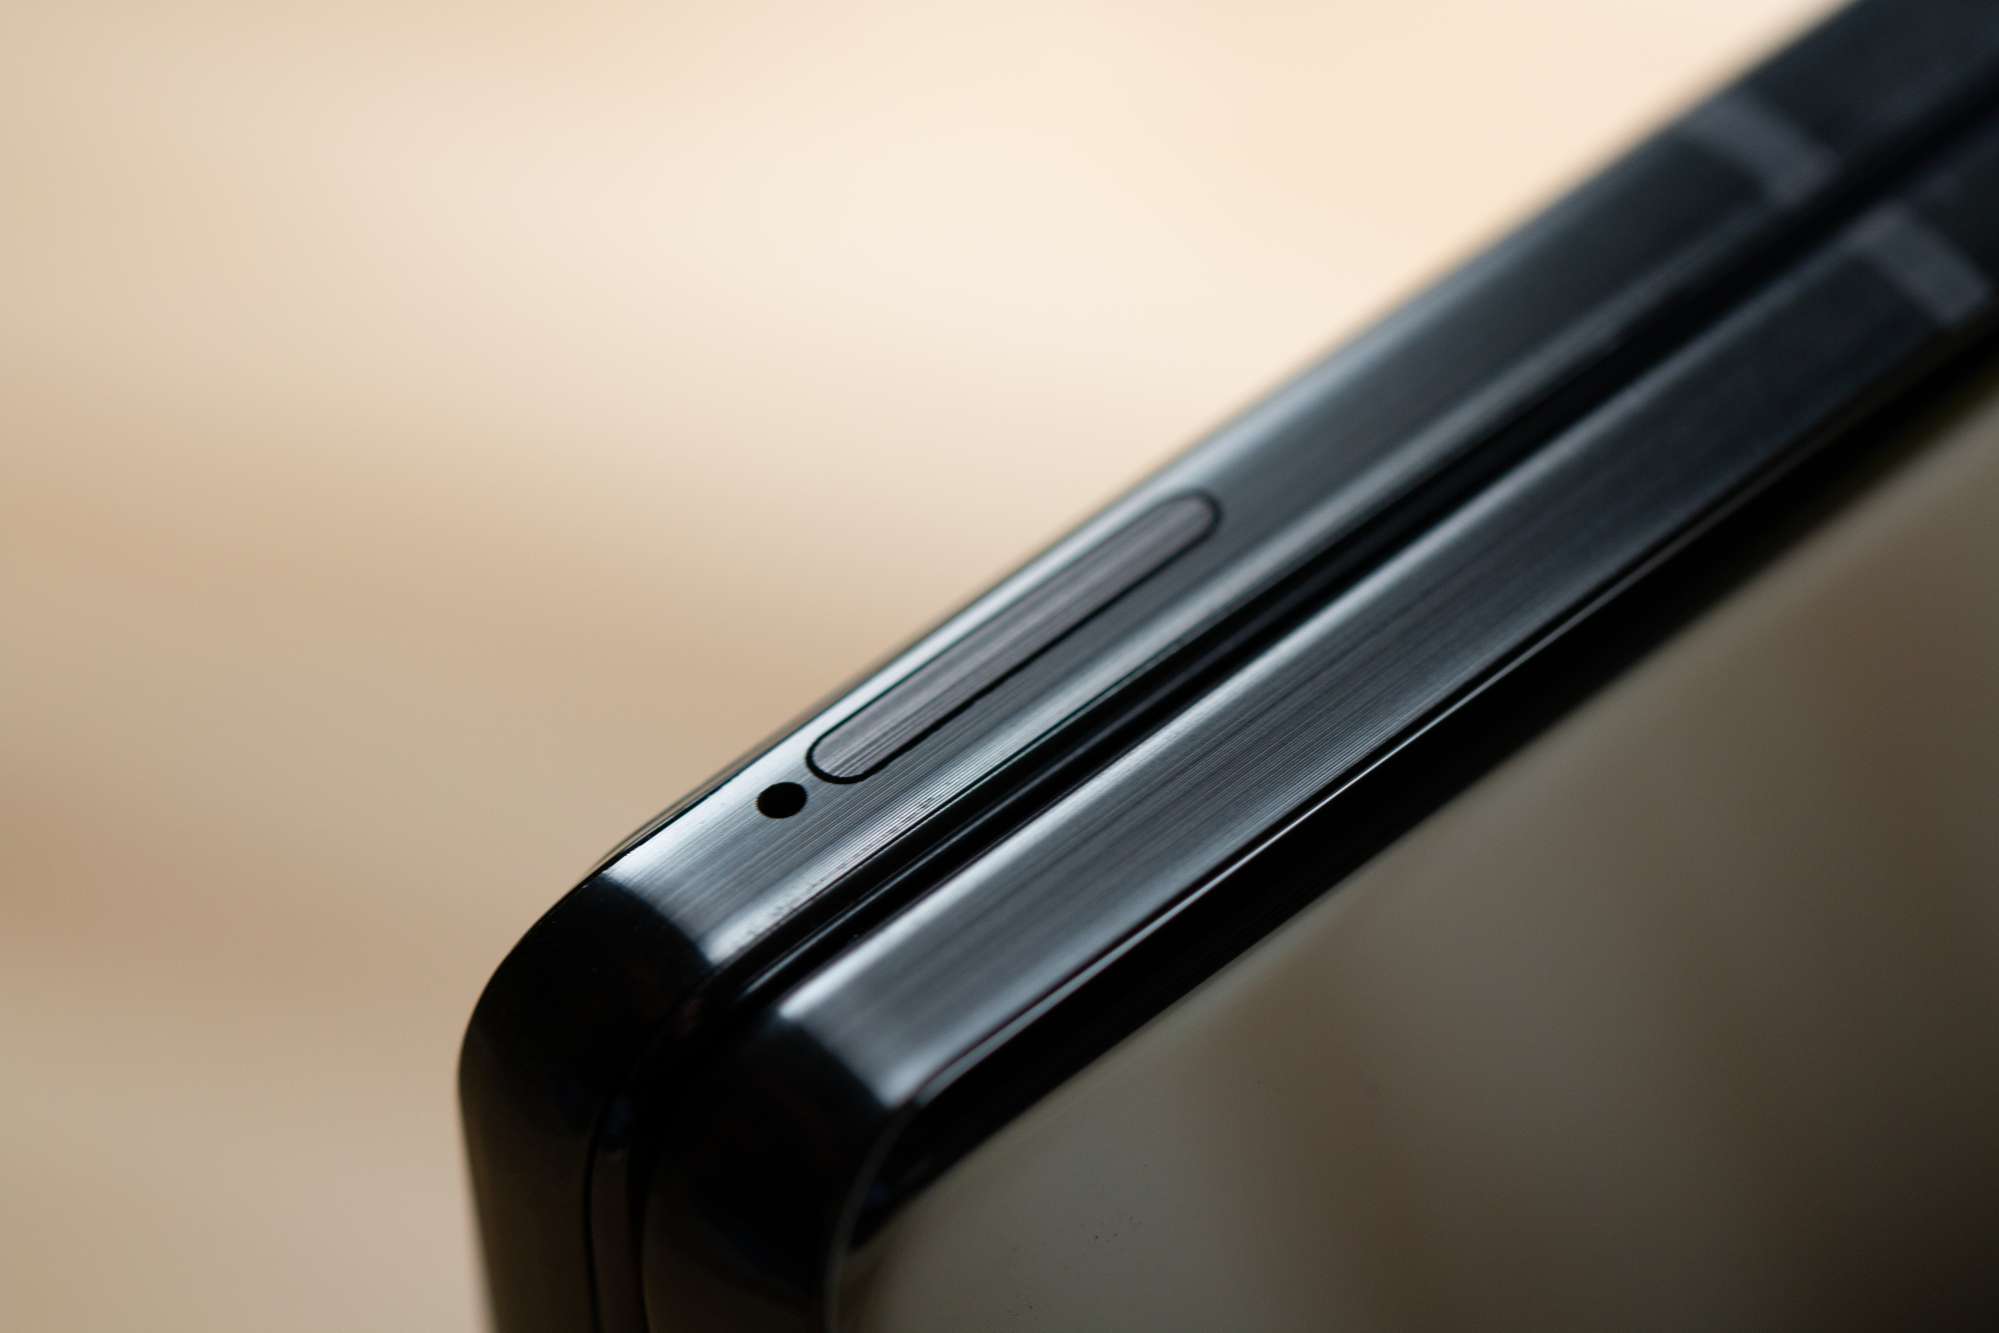 Kas Galaxy Z Fold 2-l on laiendatav mälu?